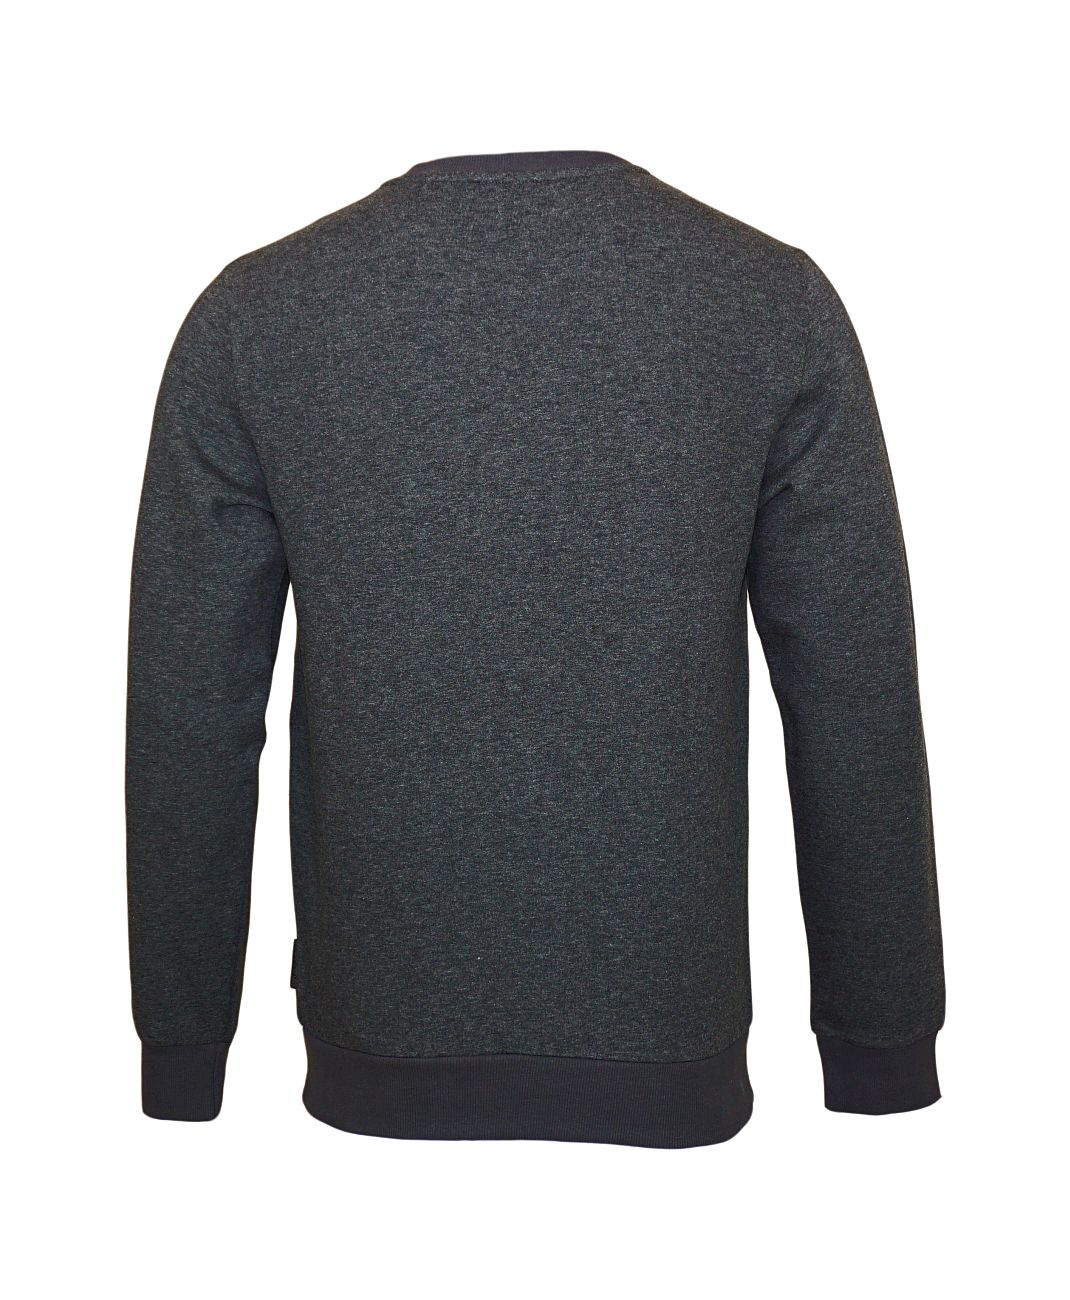 Emporio Armani Sweater Pullover Rundhals 111785 8A571 57720 GRIGIO MELANGE NERO SH18-EAS2